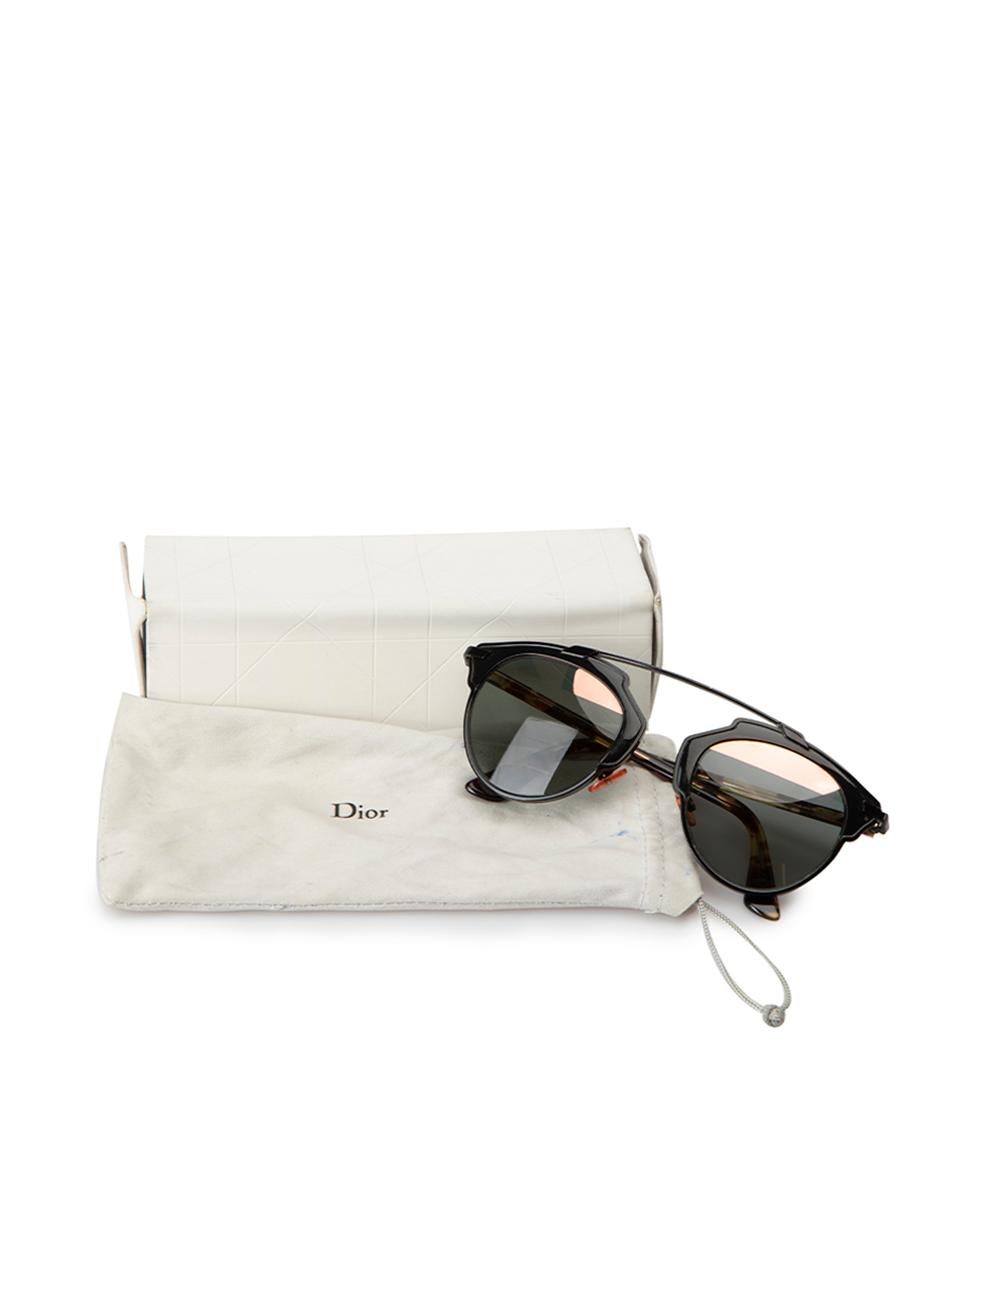 Dior Women's Brown Tortoiseshell So Real Sunglasses For Sale 4